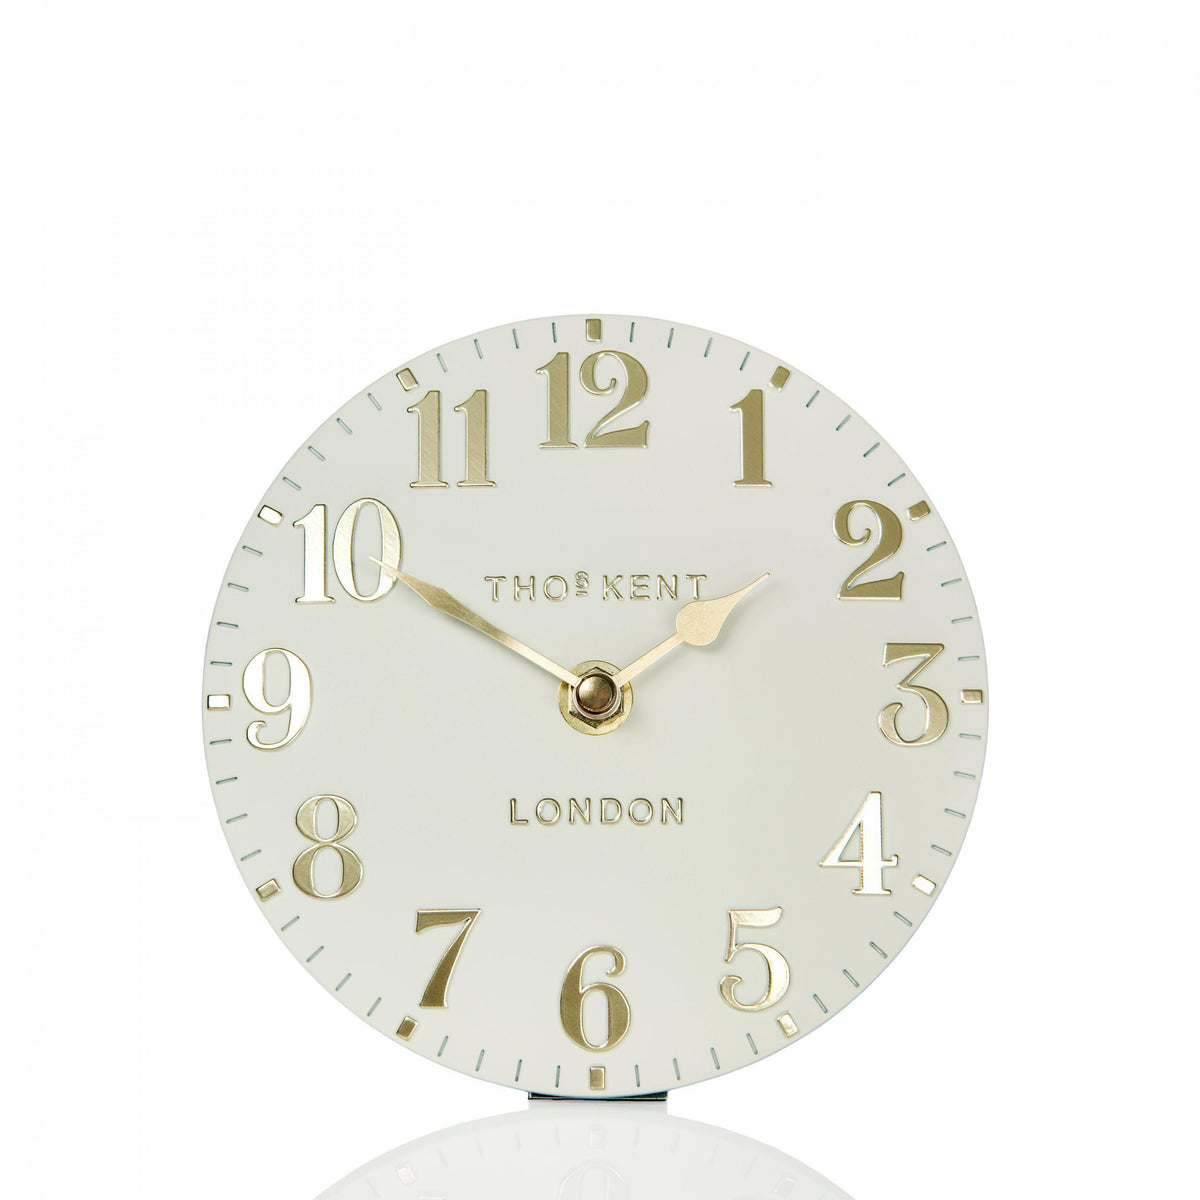 6" Arabic Mantel Clock Oatmeal